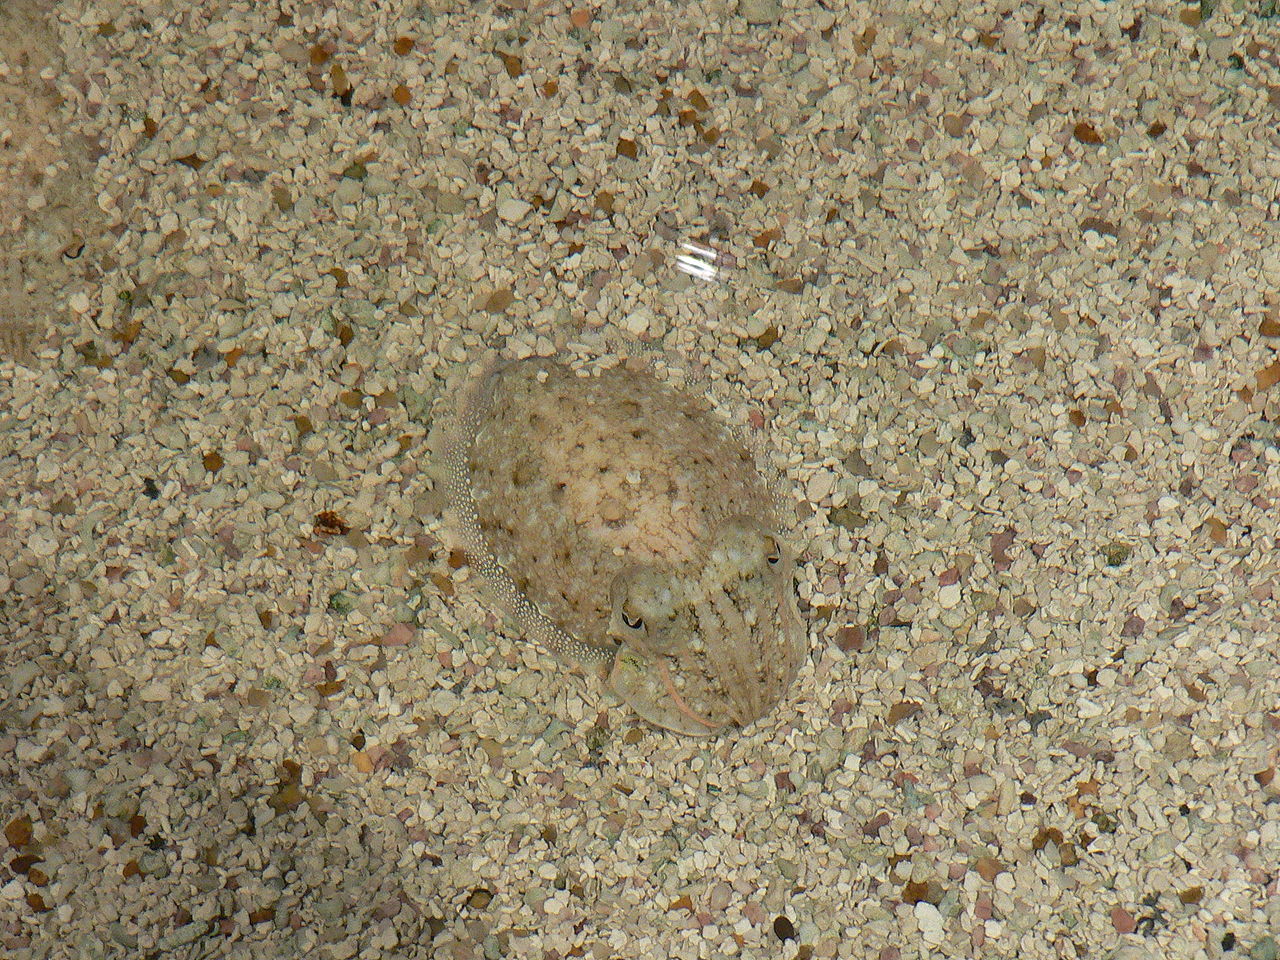 Little cuttlefish